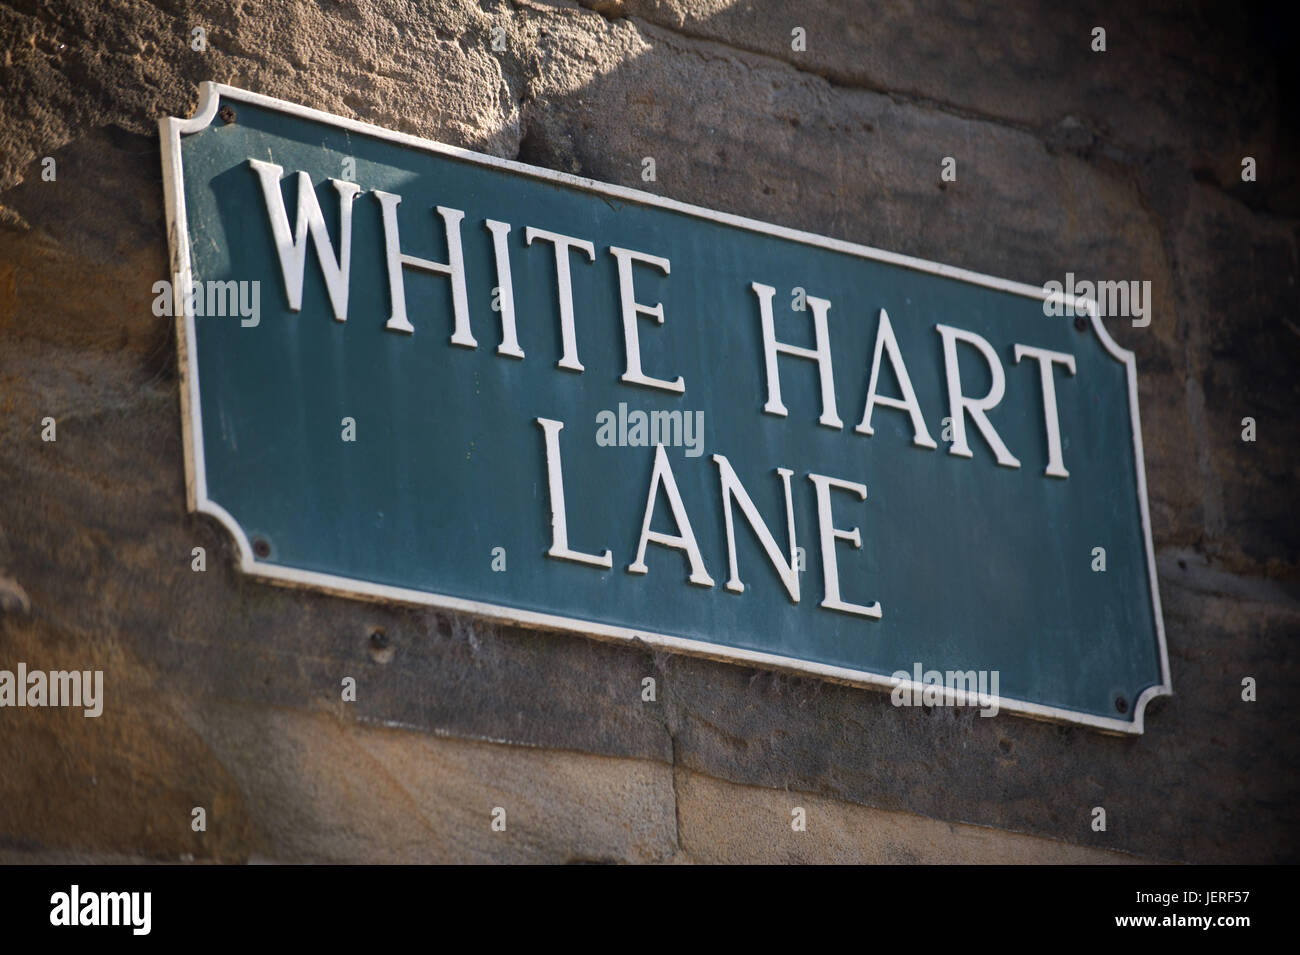 White Hart Lane street sign, Alnwick, Northumberland Stock Photo